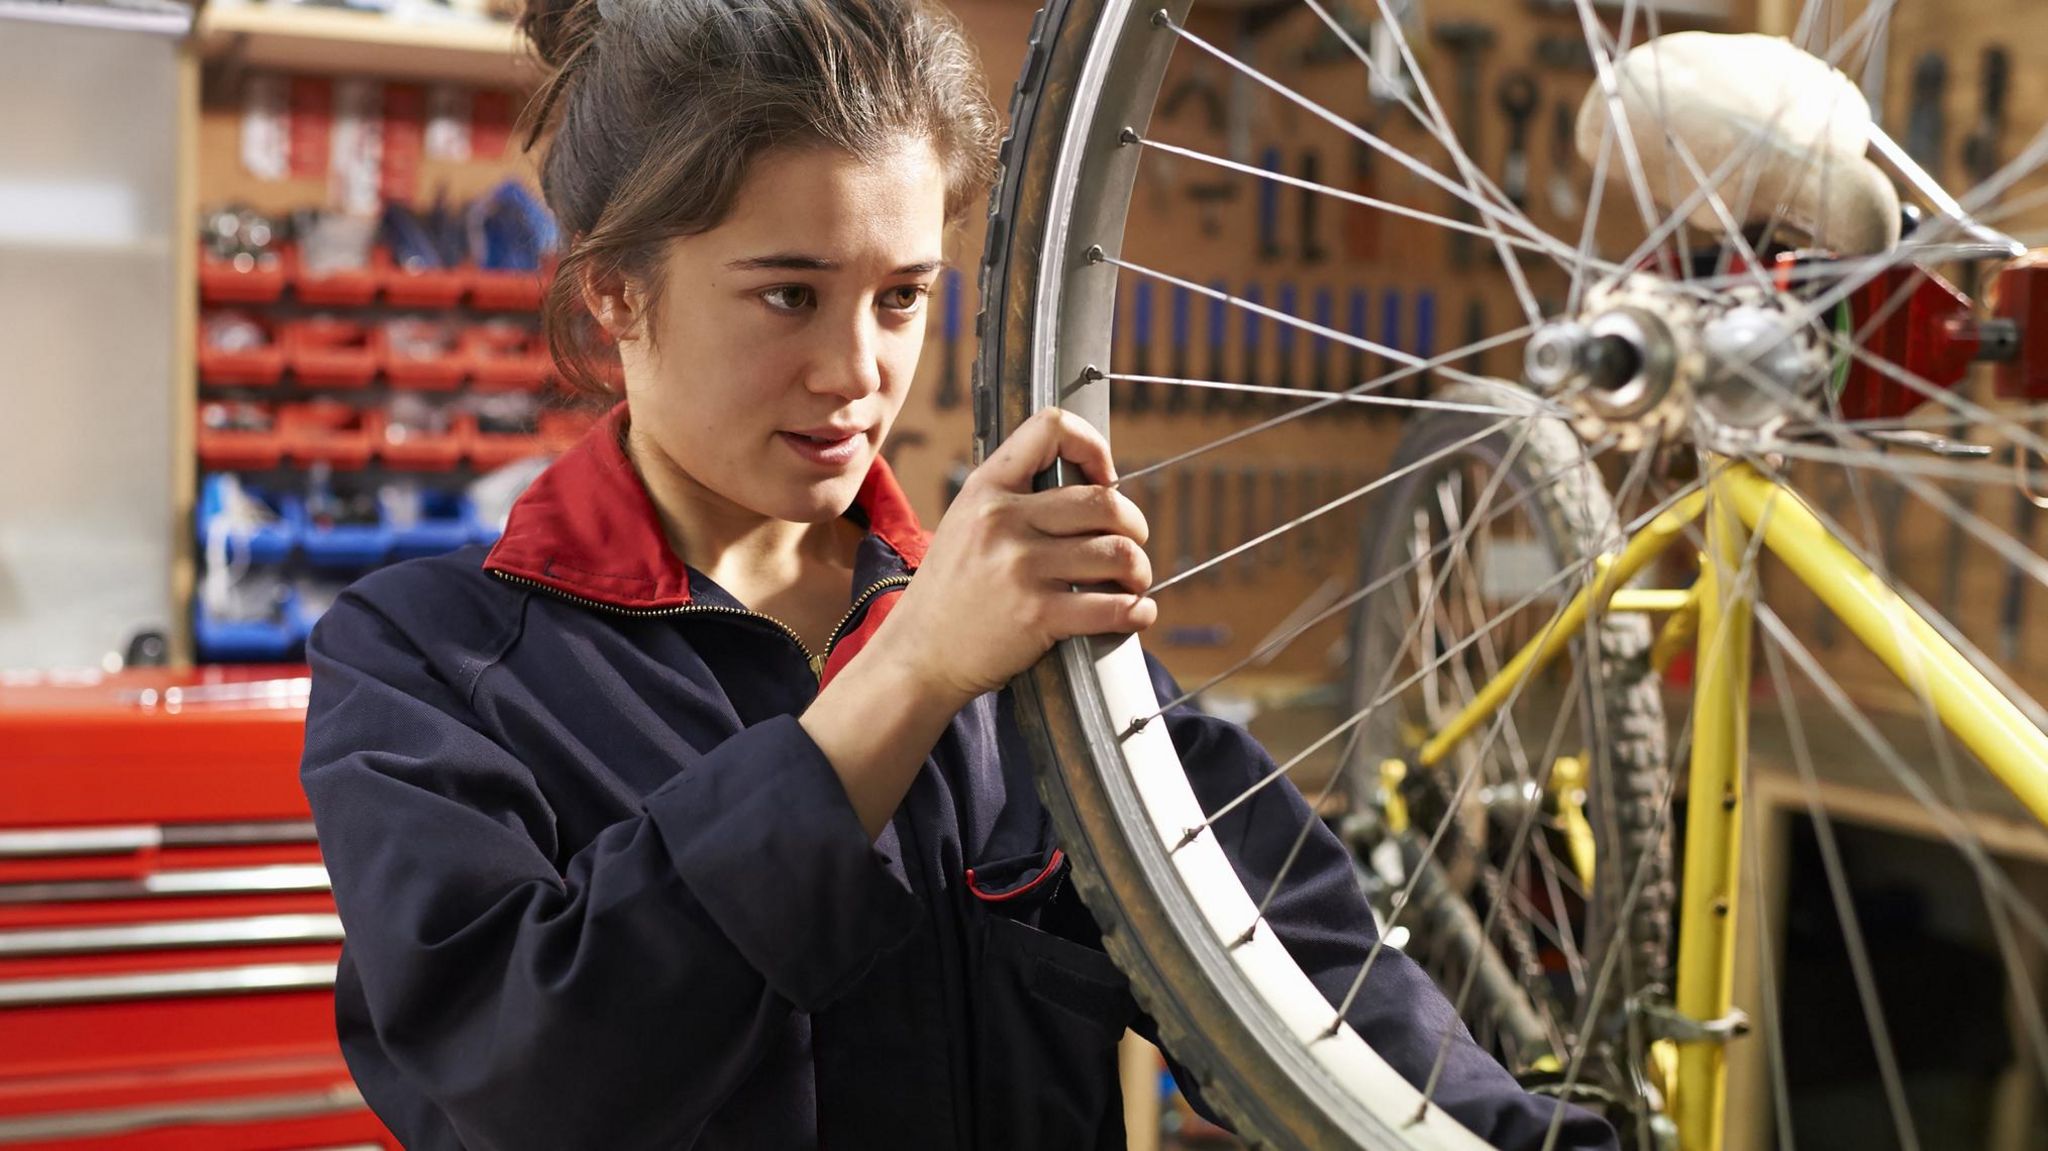 A young woman fixing a bike